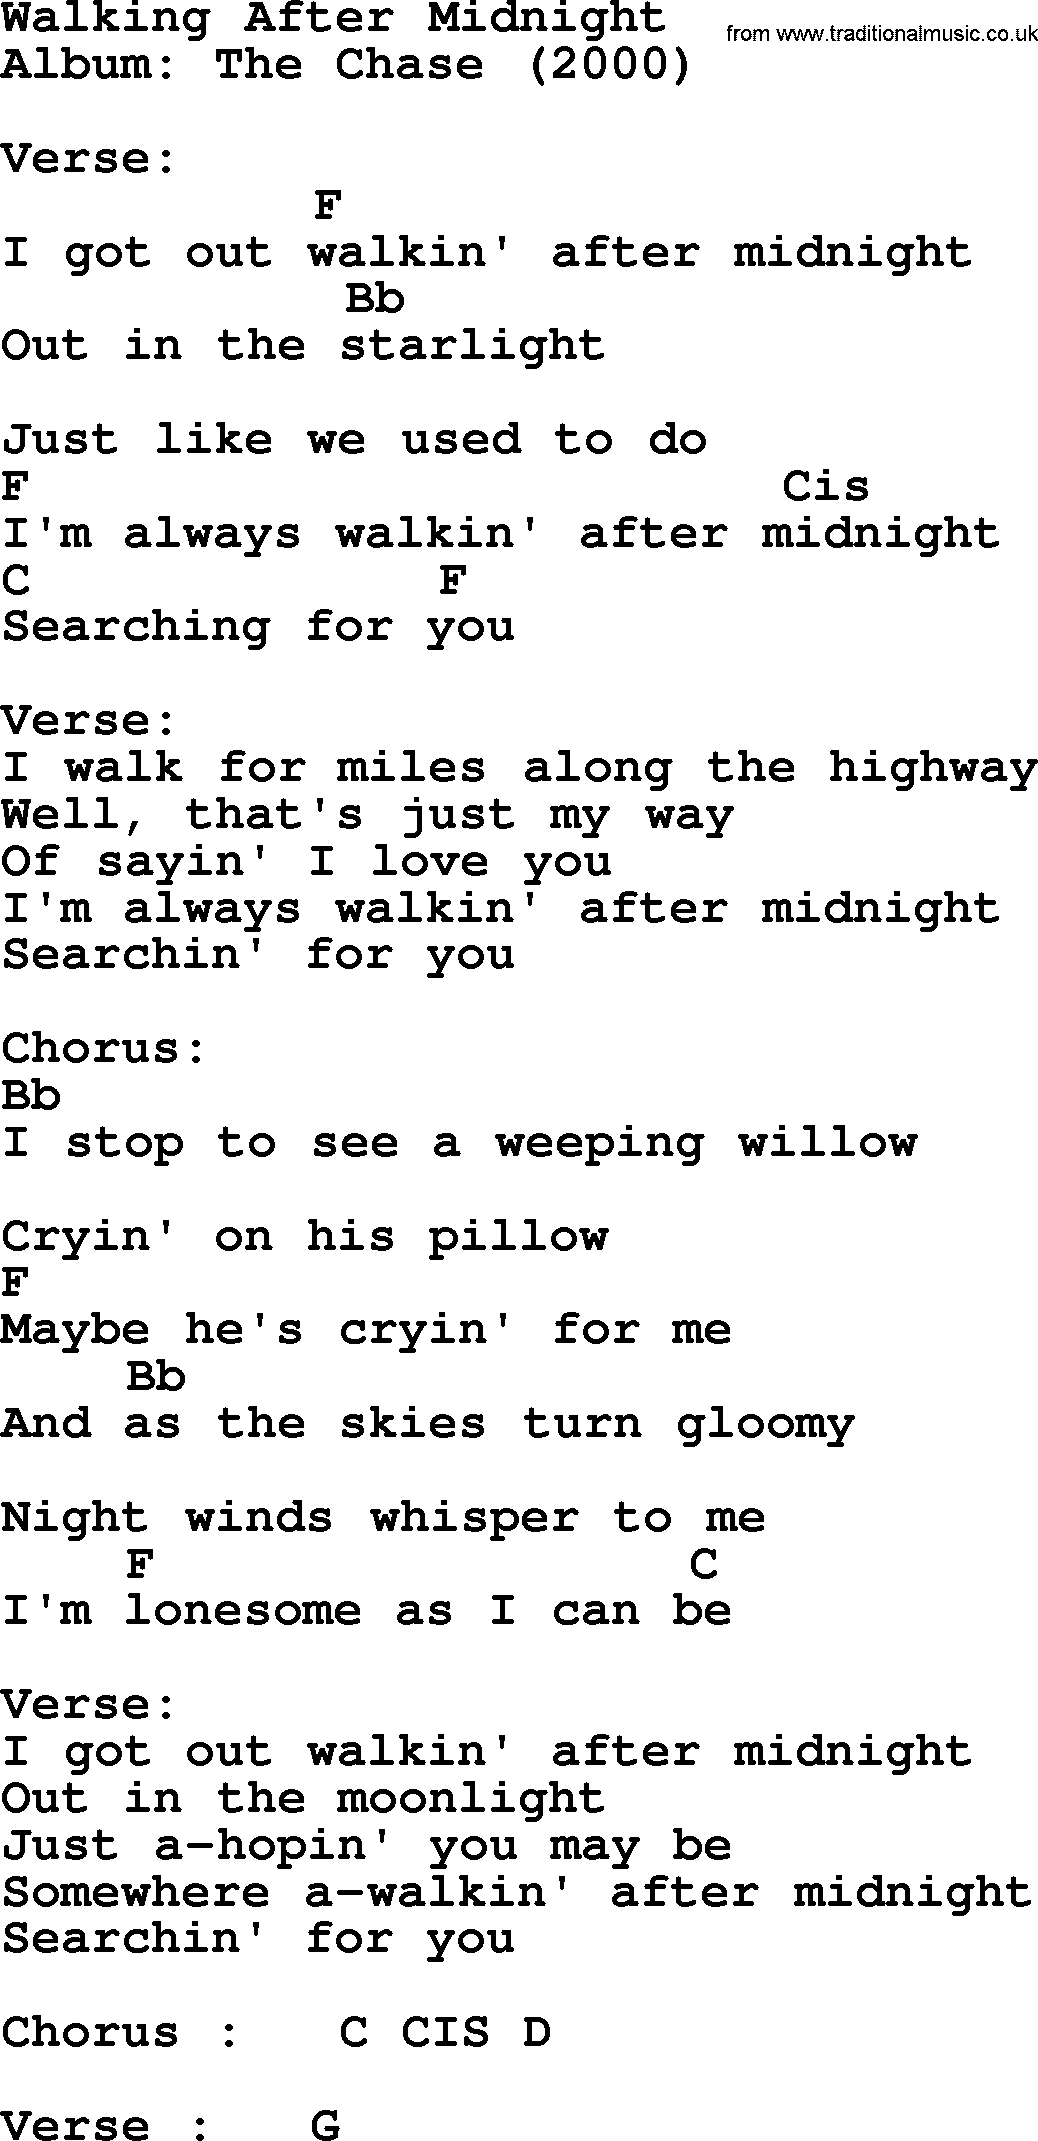 Garth Brooks song: Walking After Midnight, lyrics and chords